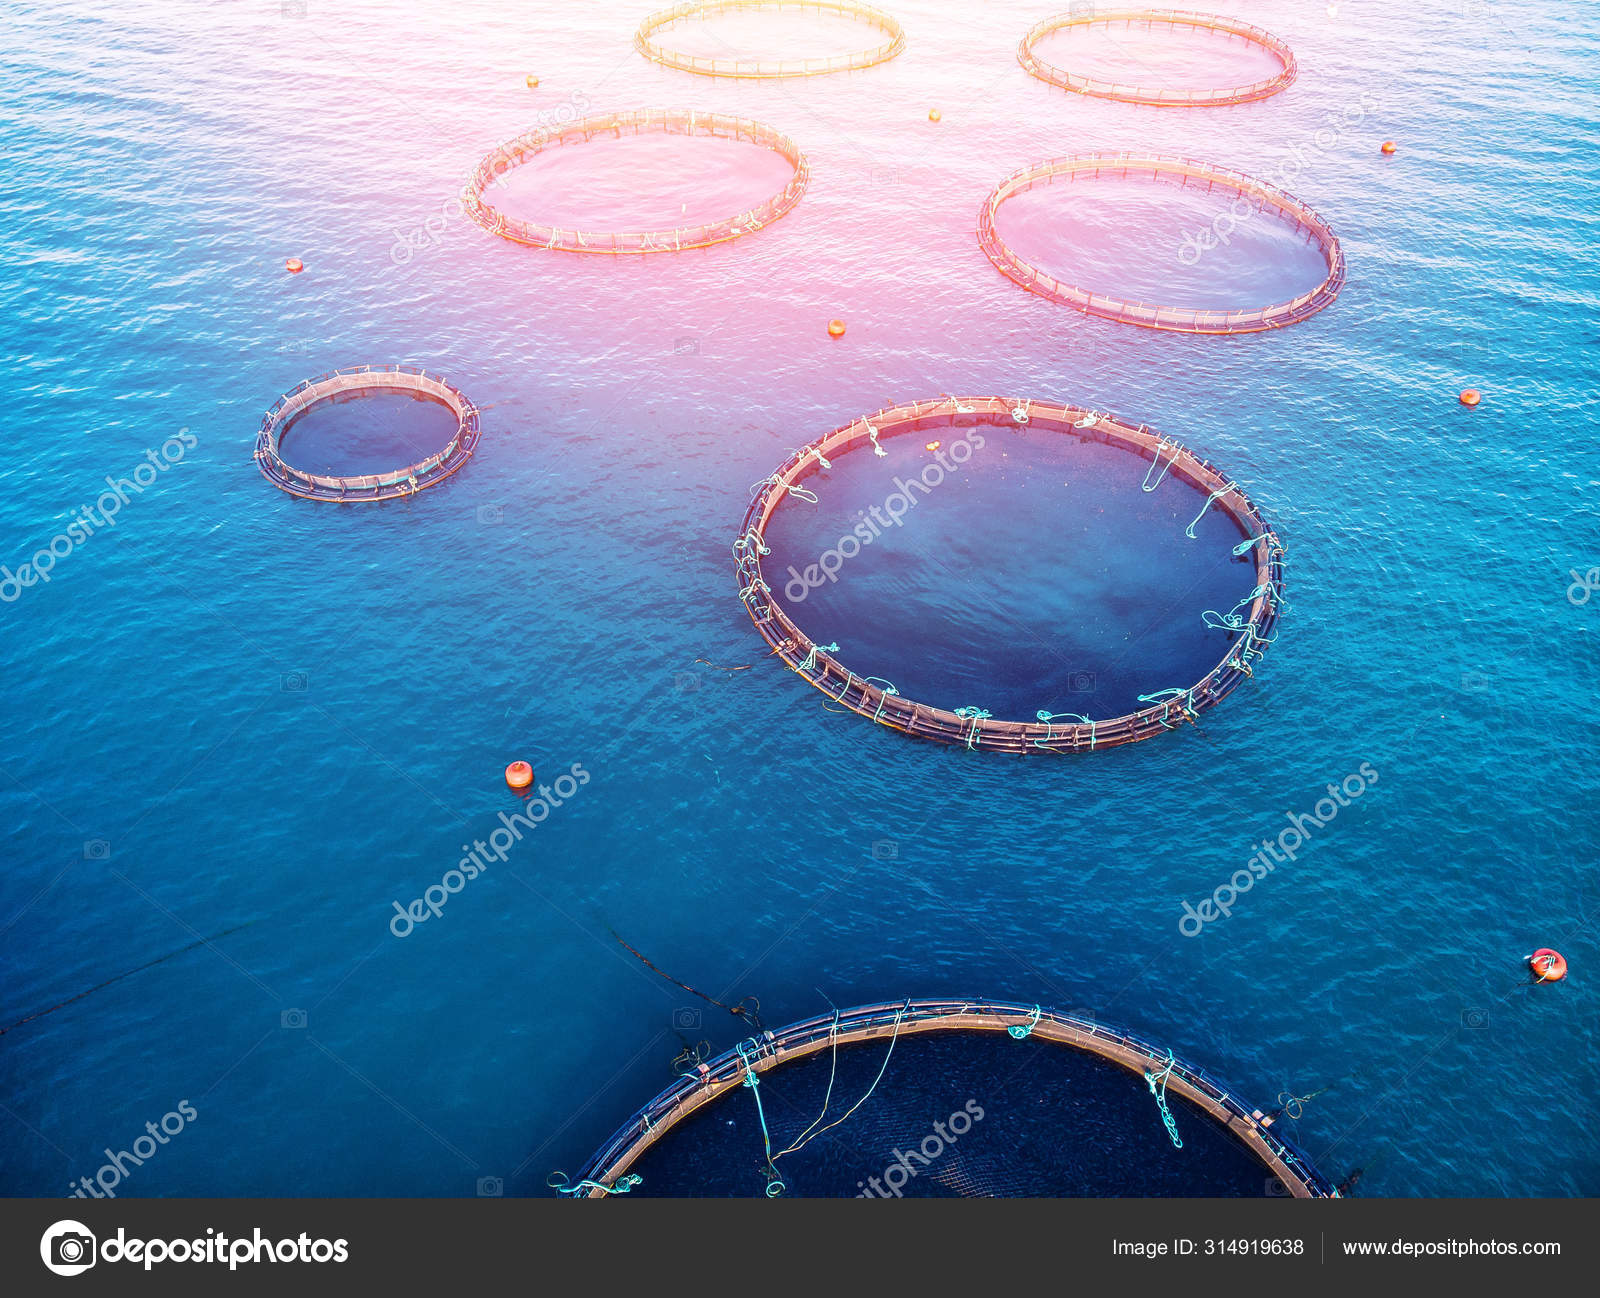 https://st4.depositphotos.com/15237386/31491/i/1600/depositphotos_314919638-stock-photo-farm-fish-salmon-aquaculture-blue.jpg